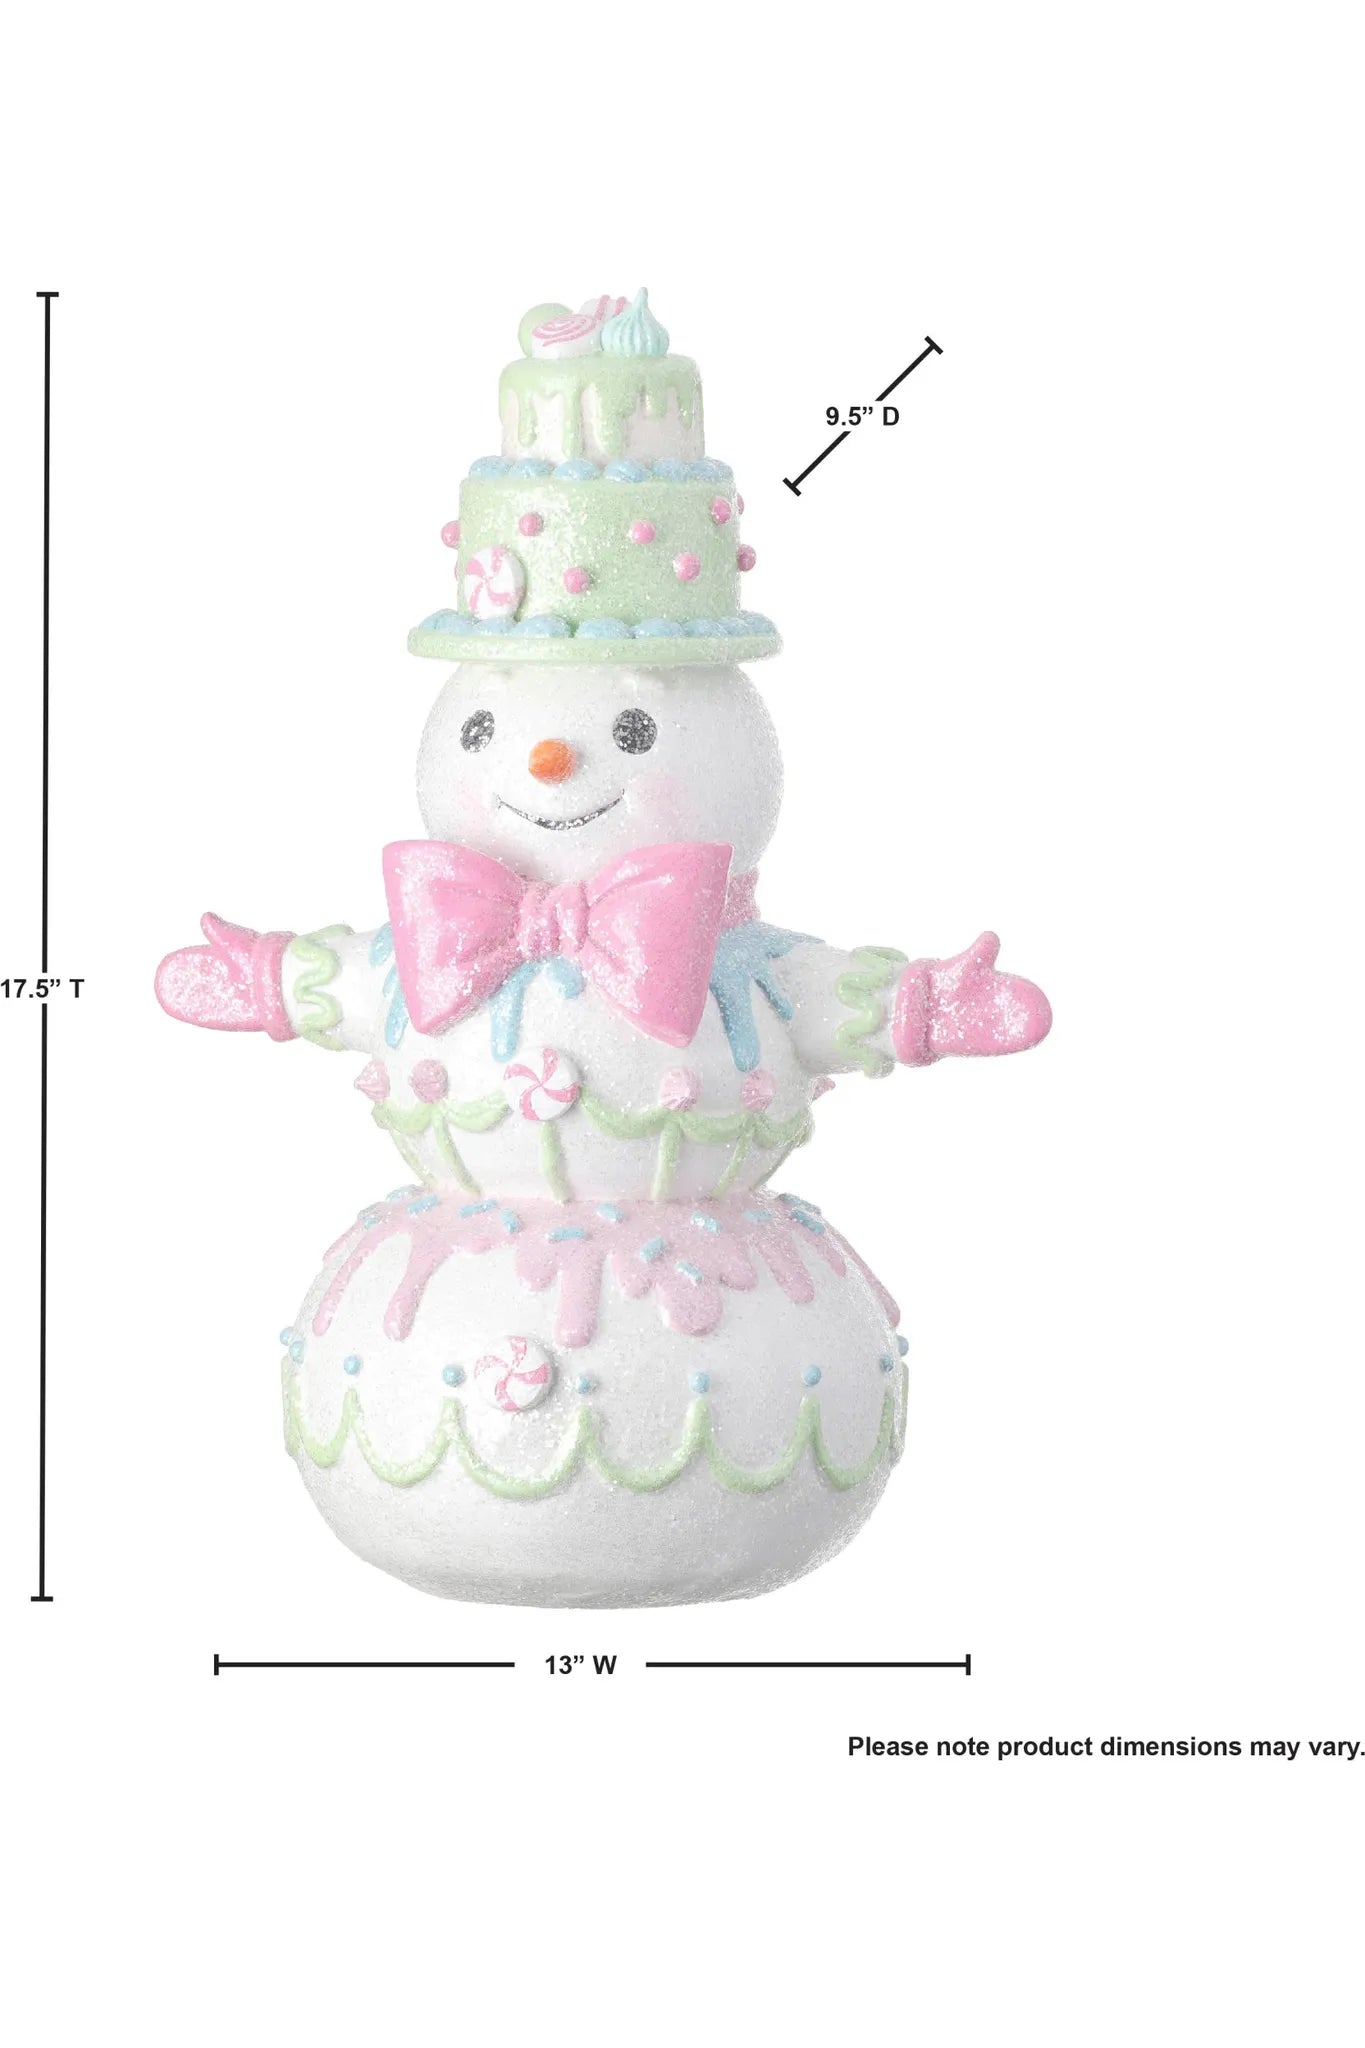 Shop For 17.5" Glittered Candylicious Snowman Figurine MTX69050